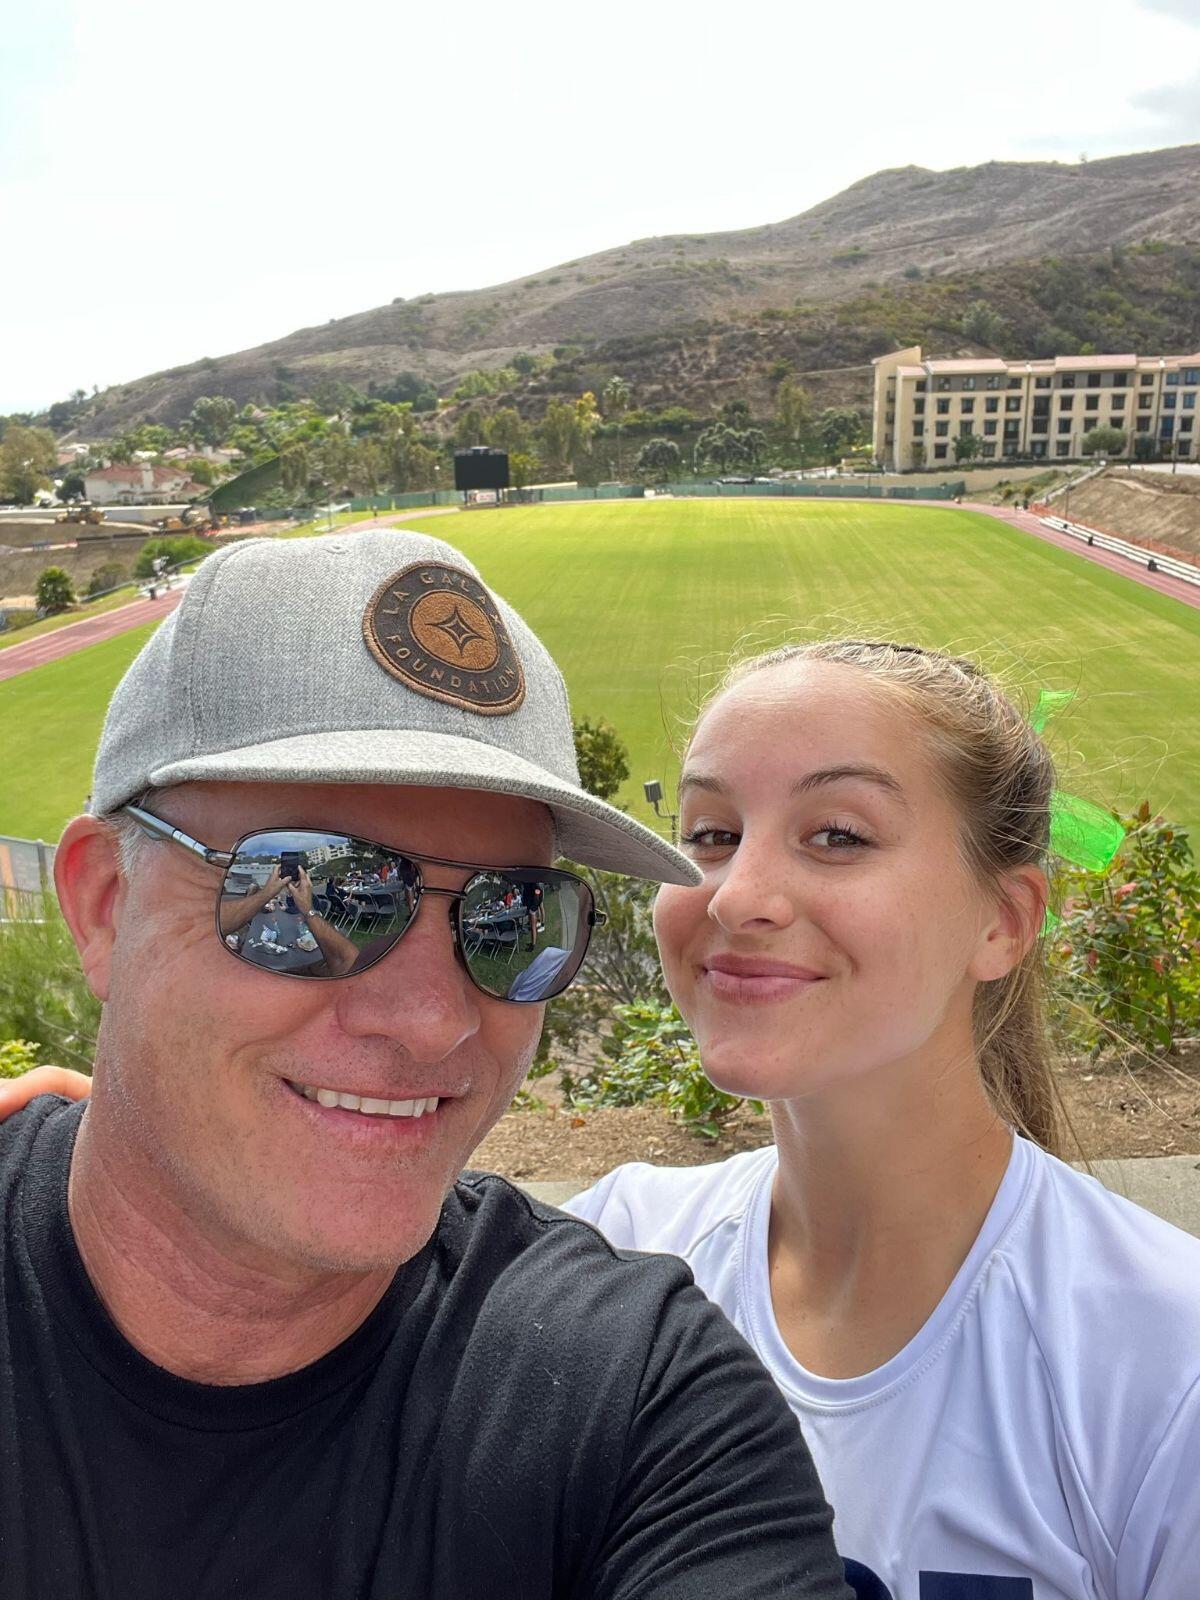 Former U.S. soccer star Eric Wynalda takes a selfie with his daughter, Pepperdine soccer player Tatum Wynalda.